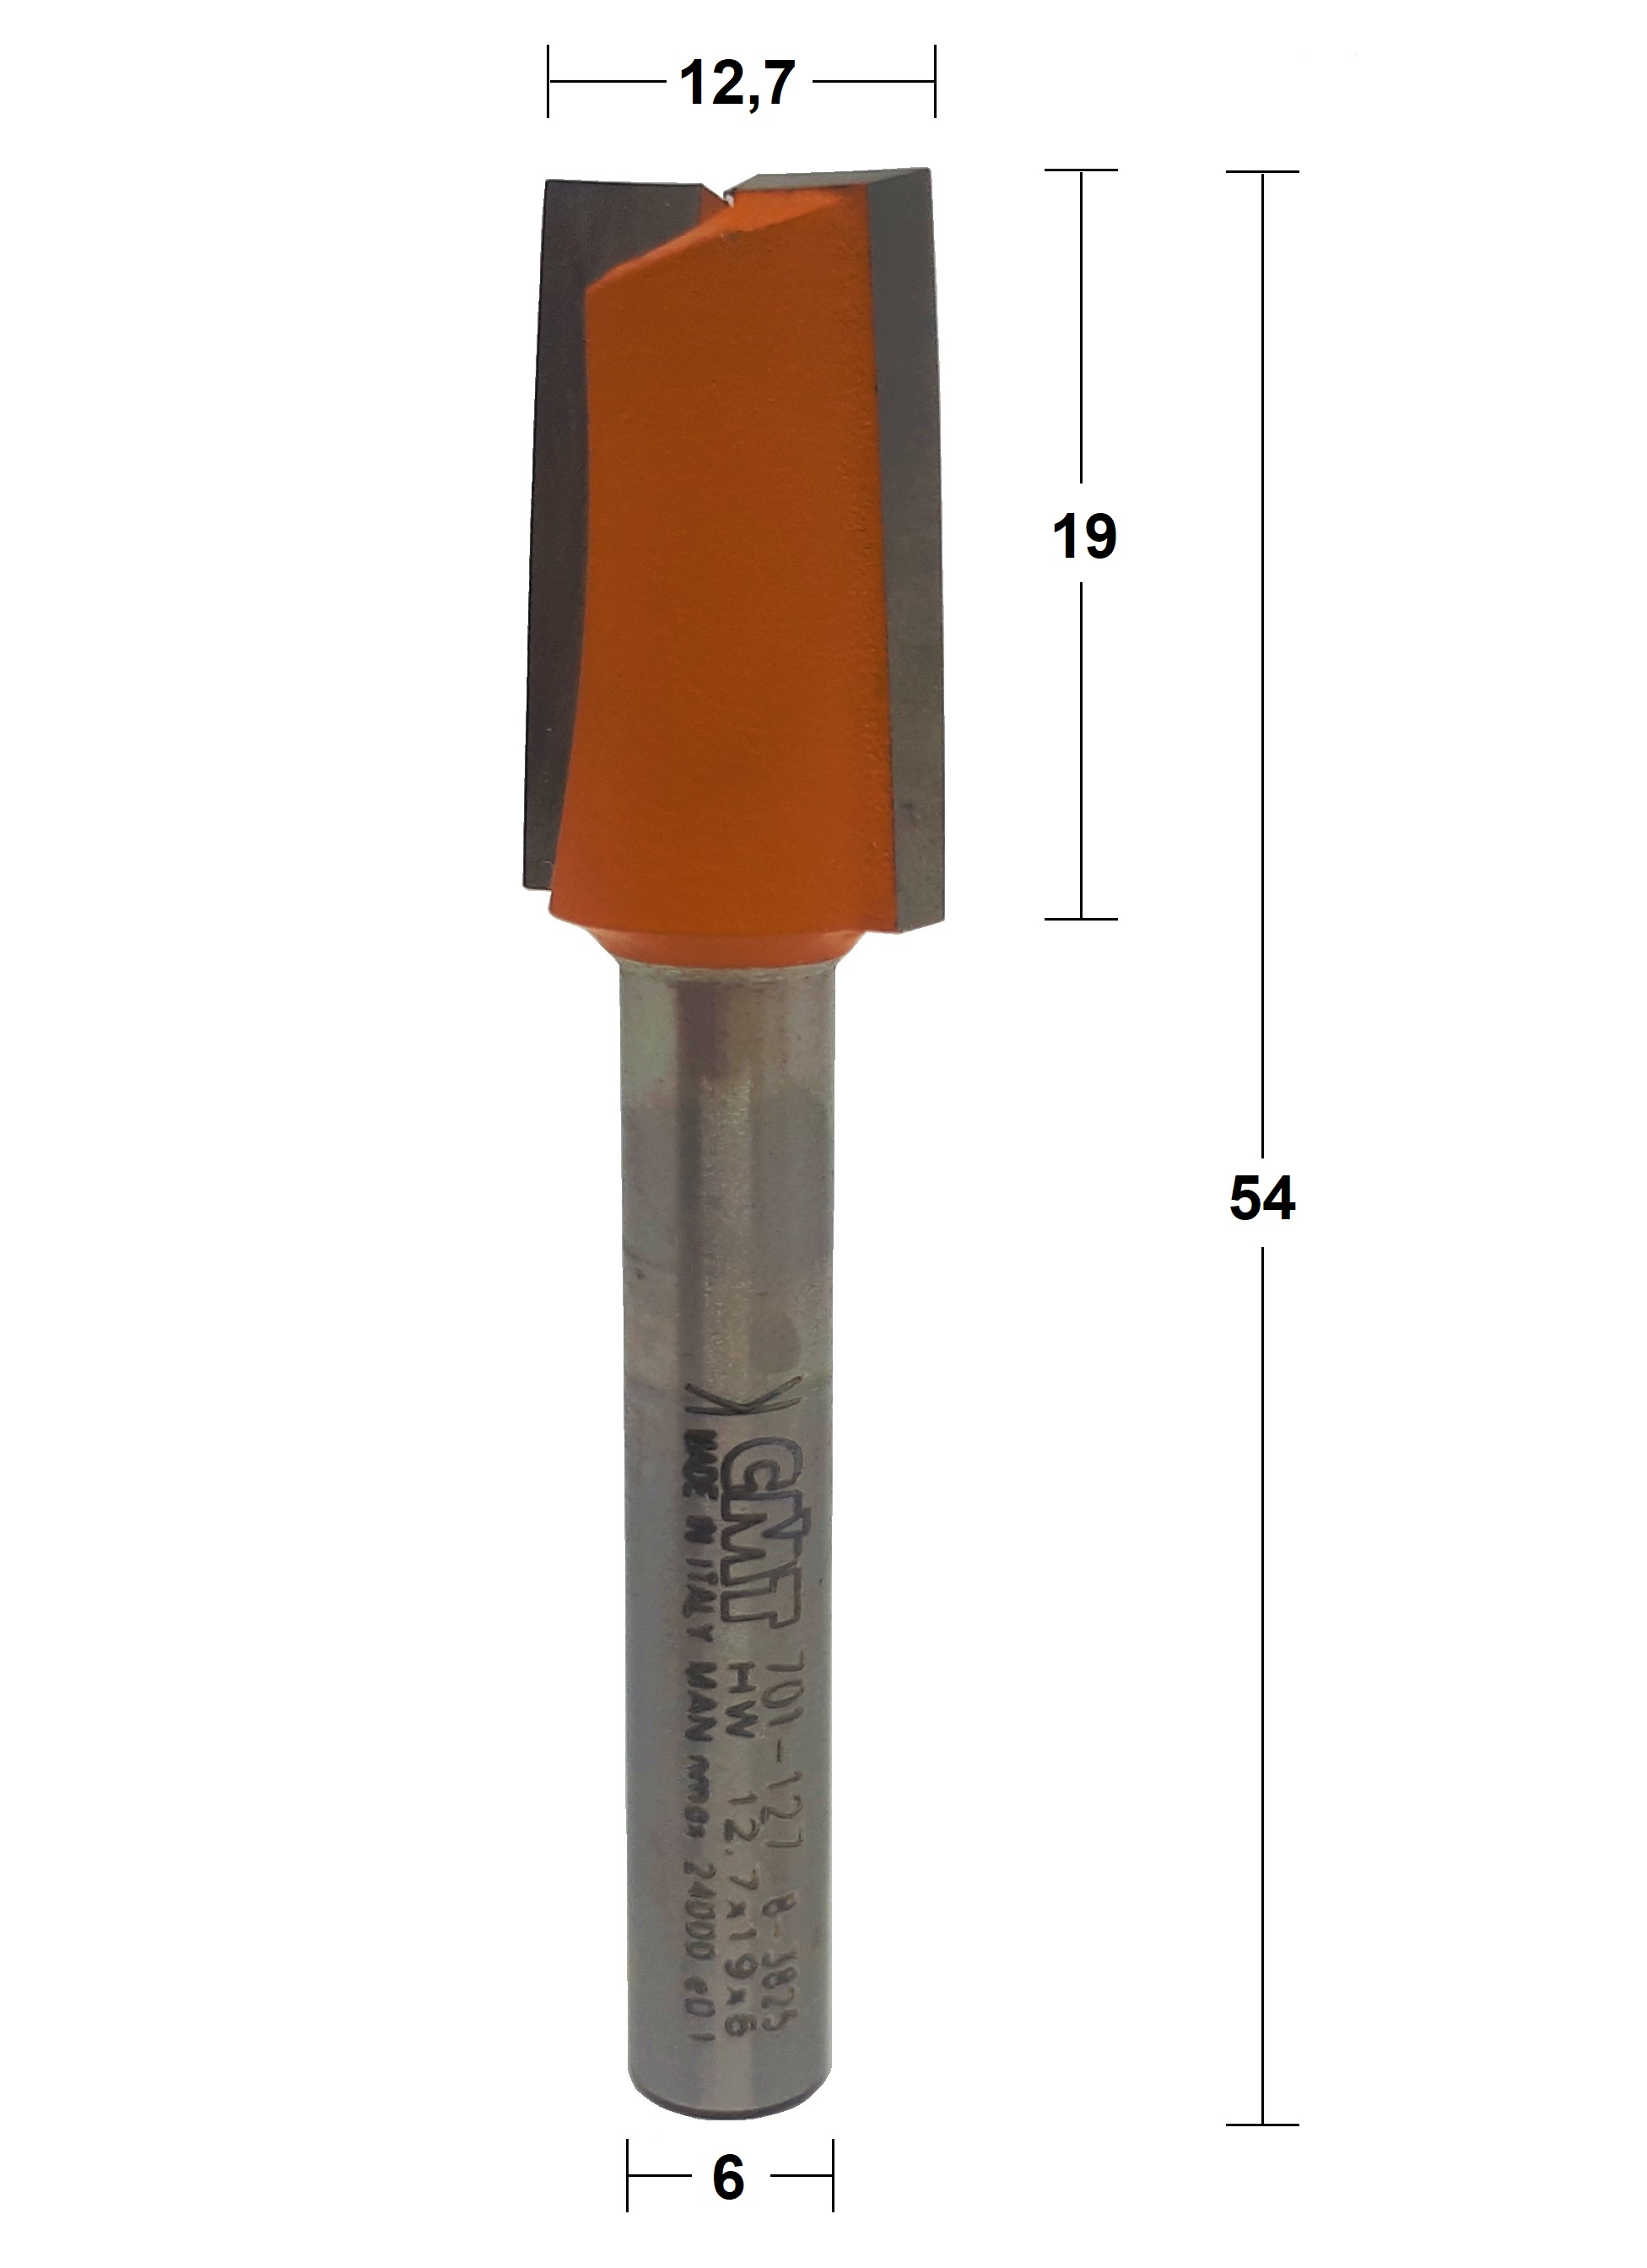 Fresa para Entalhar HW Ø12,7x54mm - marca CMT - Cód. 701.127.11